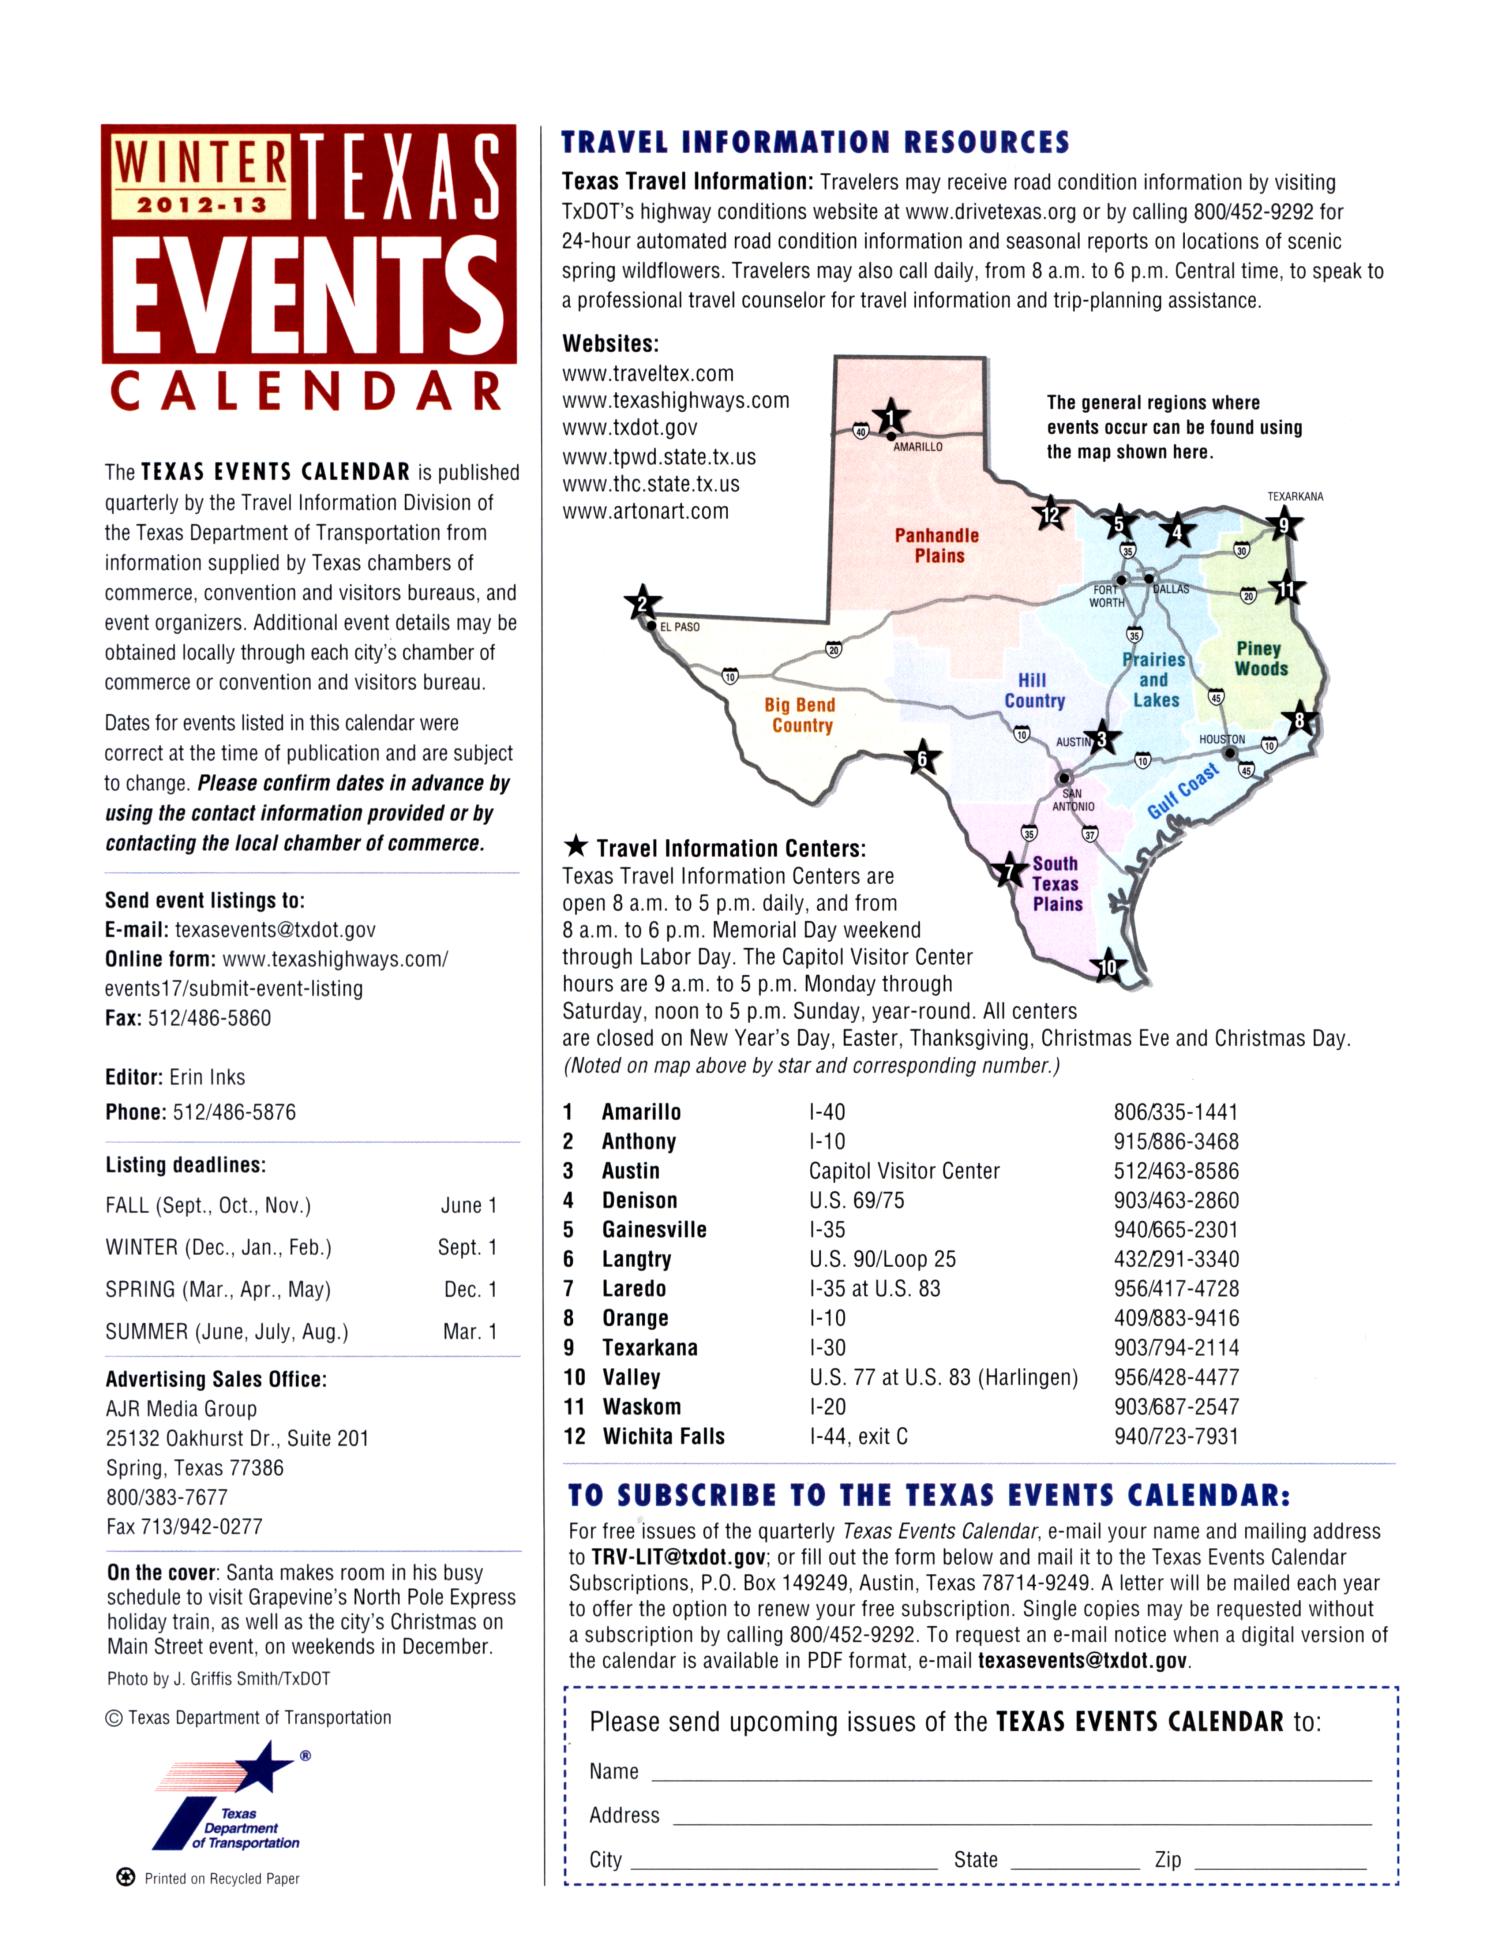 Texas Events Calendar, Winter 2012-13
                                                
                                                    1
                                                